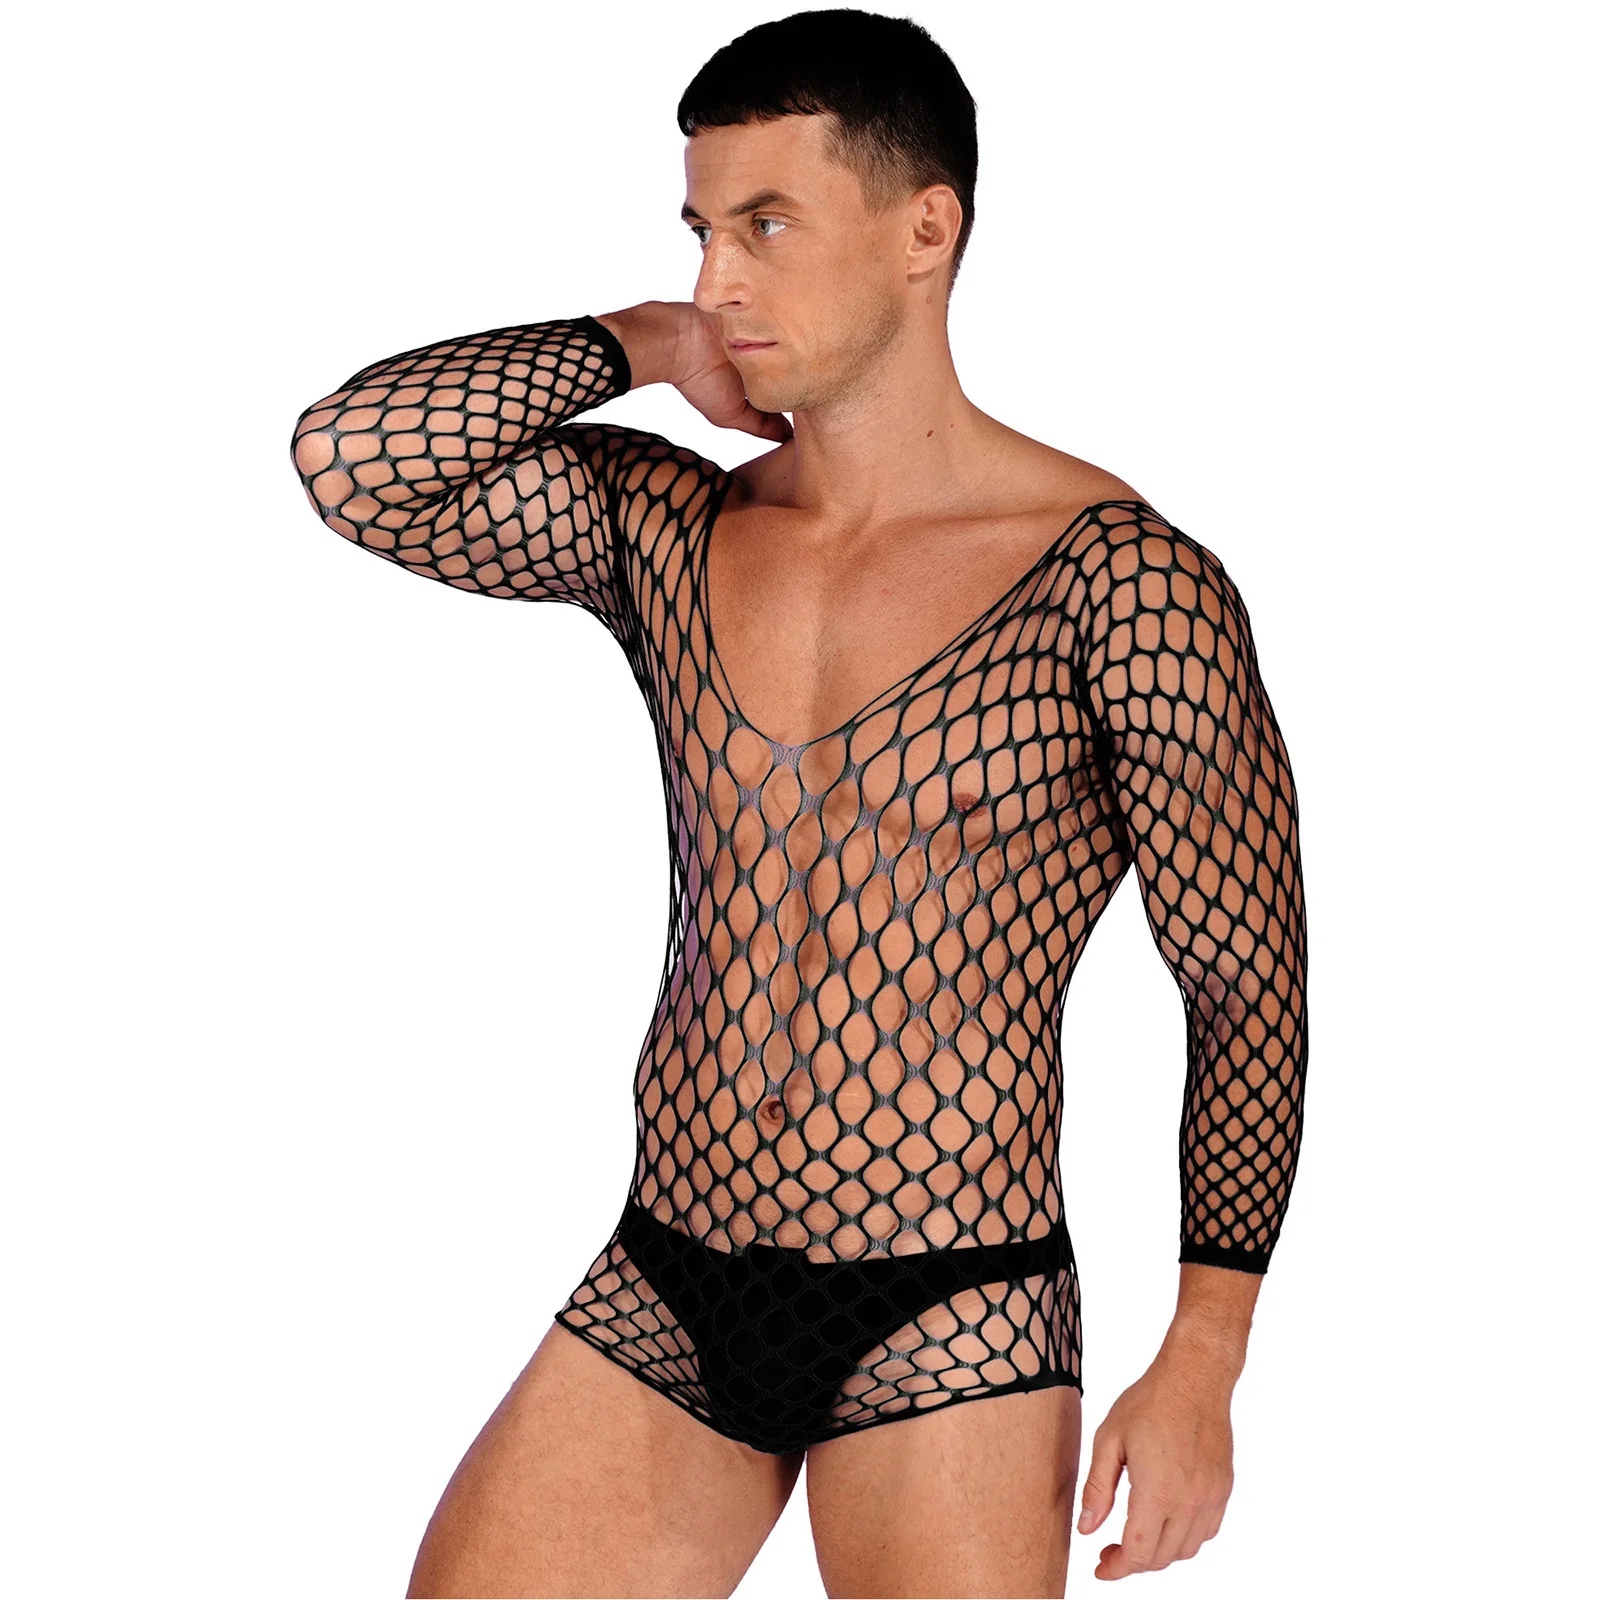 

Mens Sheer Fishnet Bodysuit Hollow Out Nightwear See-Through Mesh Swimsuit Scoop Neck Long Sleeve High Cut Leotard Jumpsuit